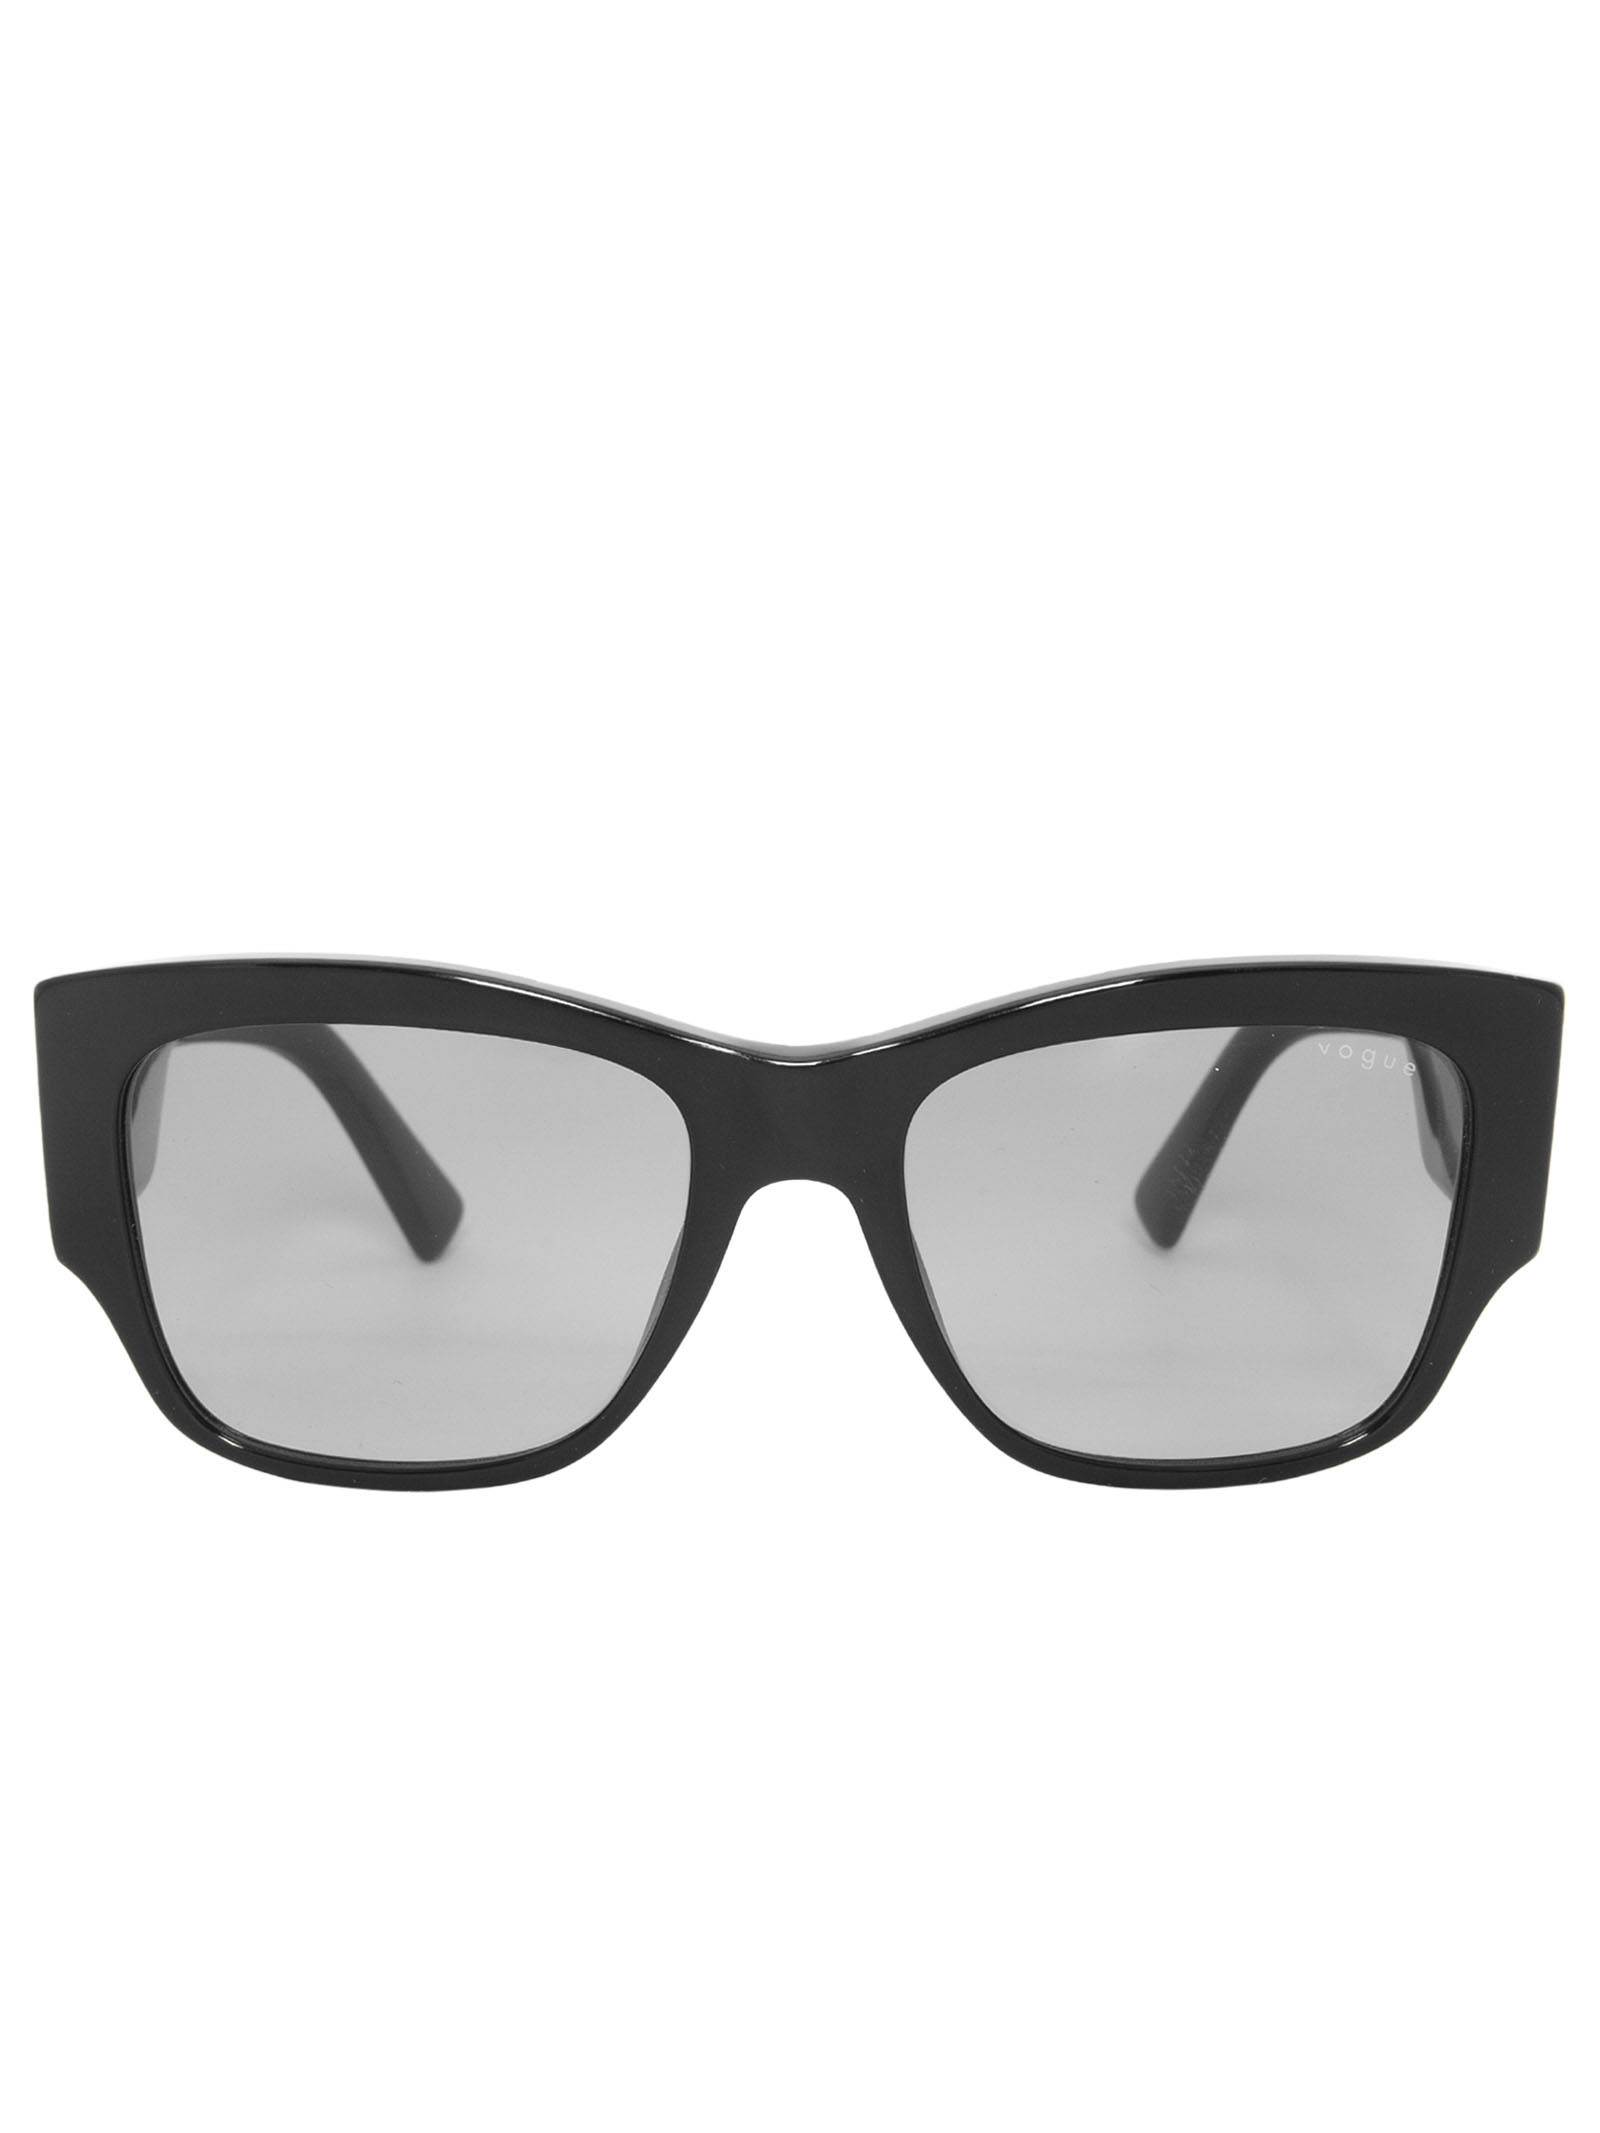 Óculos De Sol Feminino - Vogue + Hailey Bieber - Preto - Oqvestir